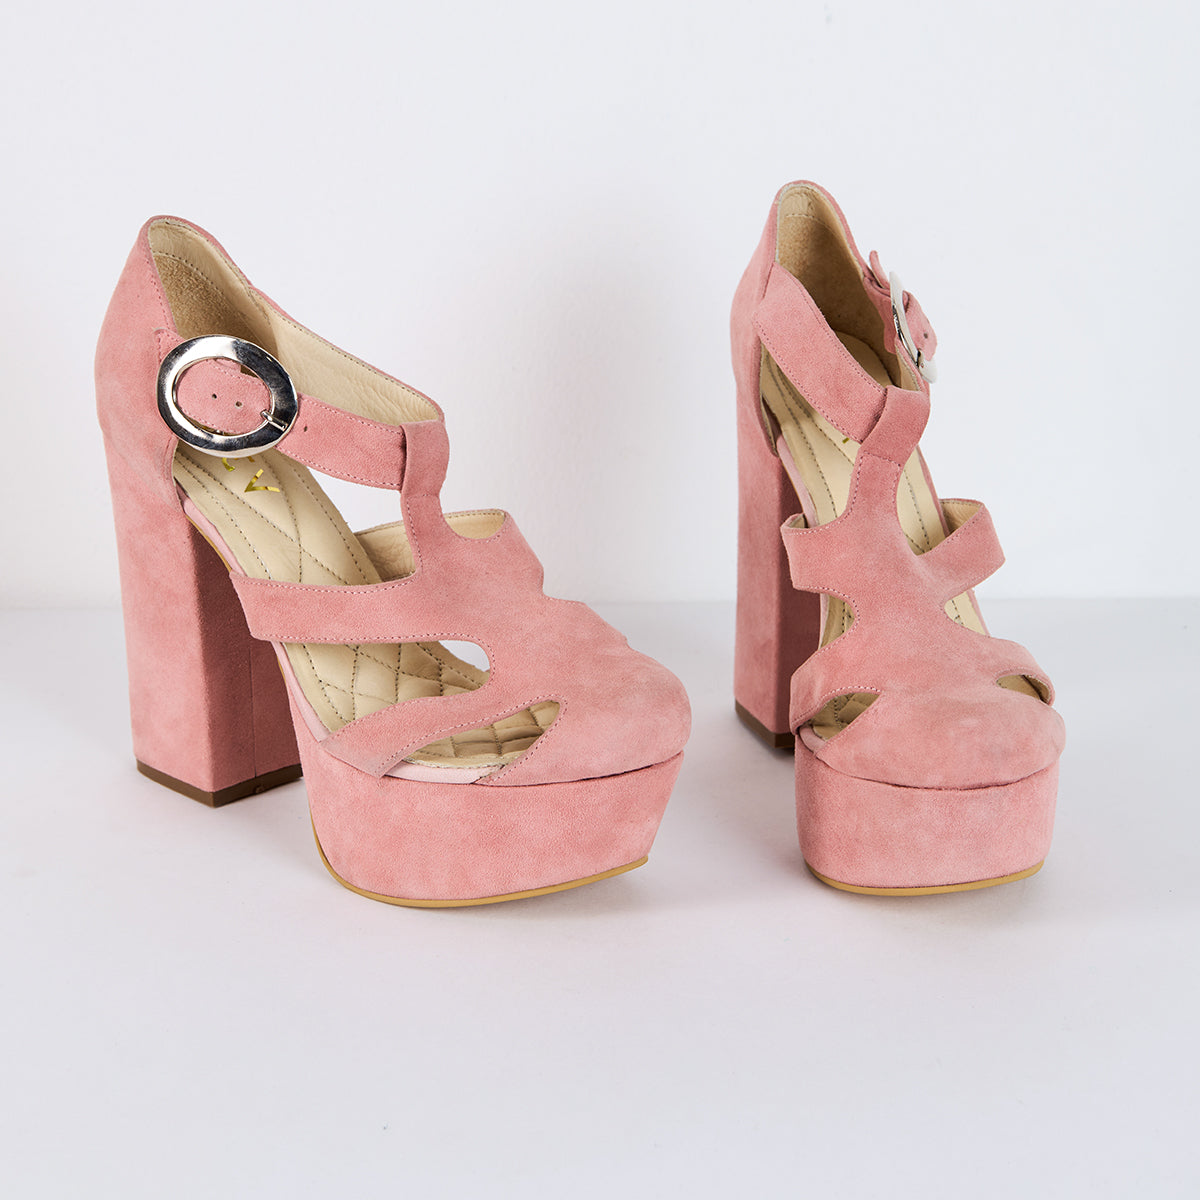 Cinnamon heels - Size 38